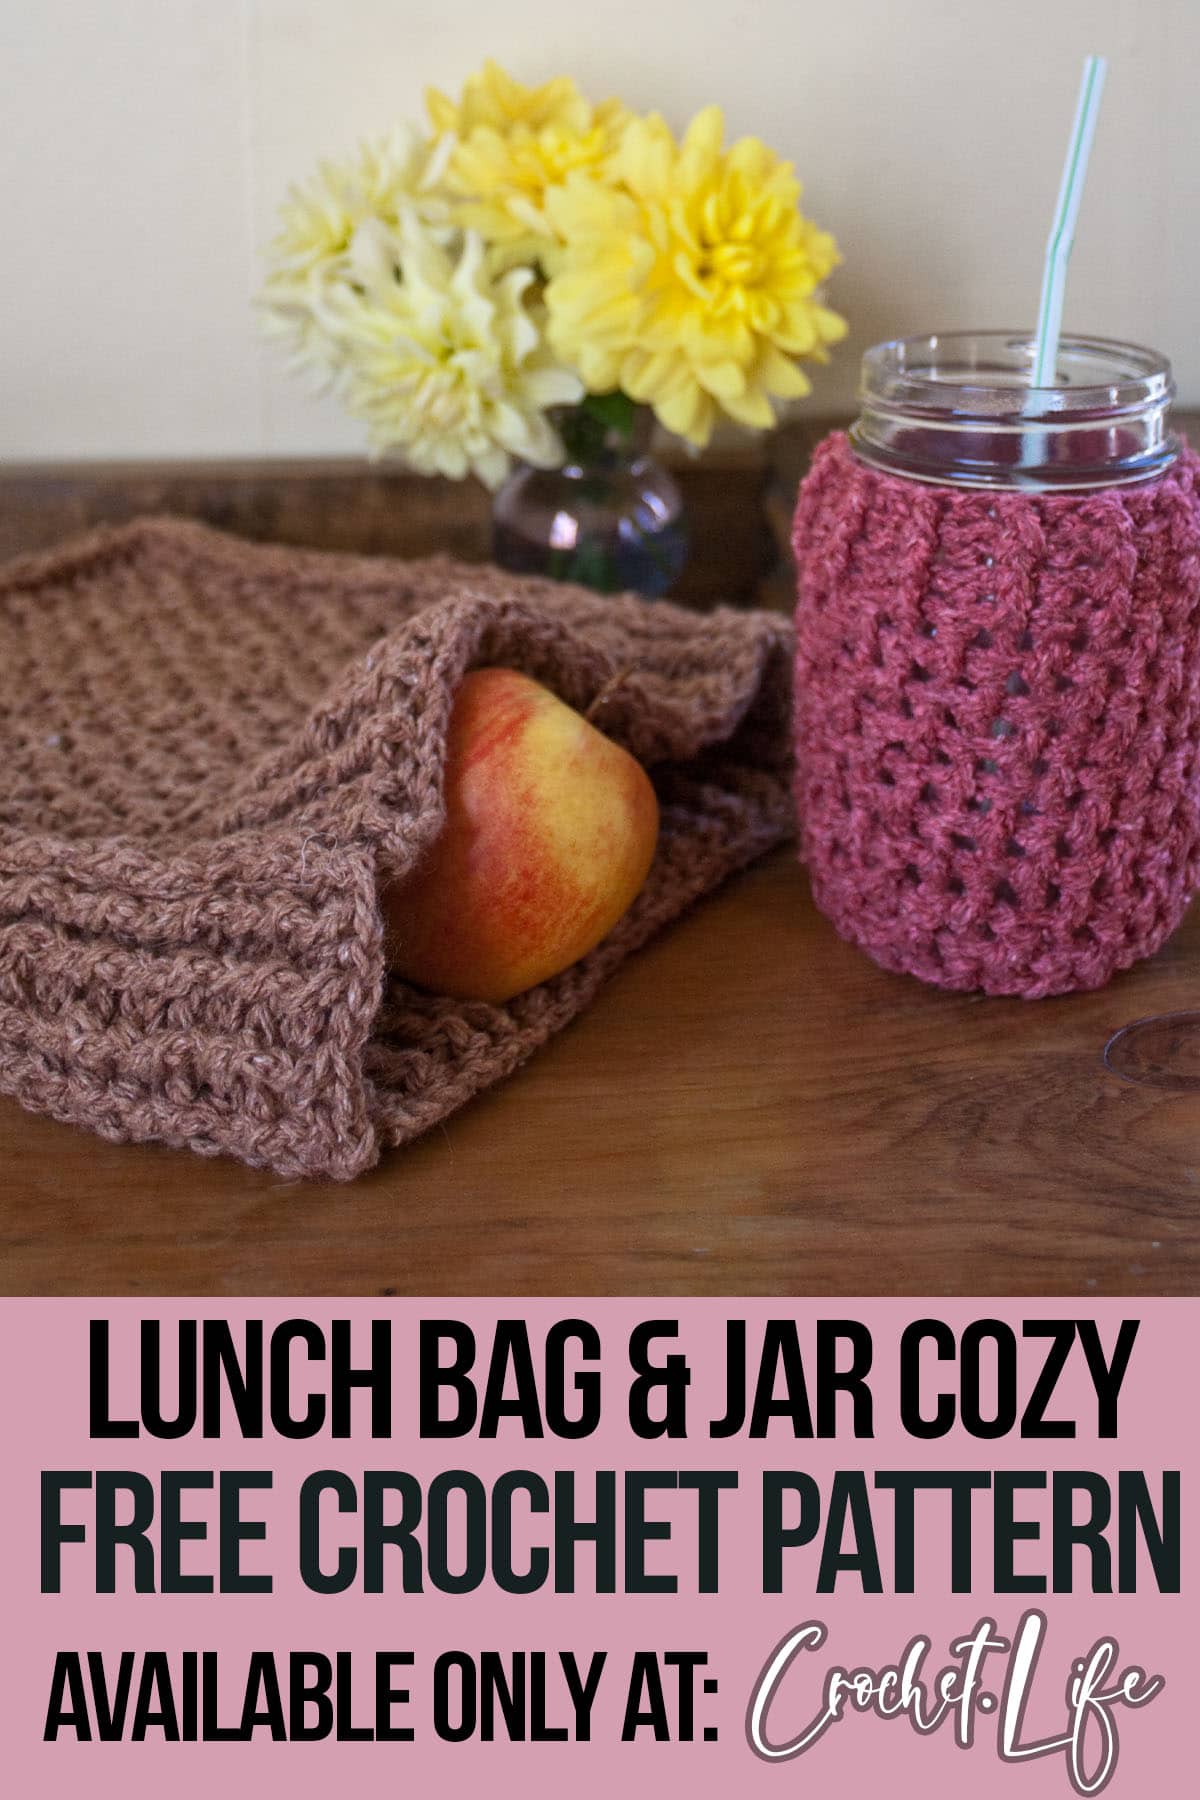 lunch bag and pint jar cozy crochet pattern set with text which reads lunch bag and jar cozy free crochet pattern available only at crochet.life